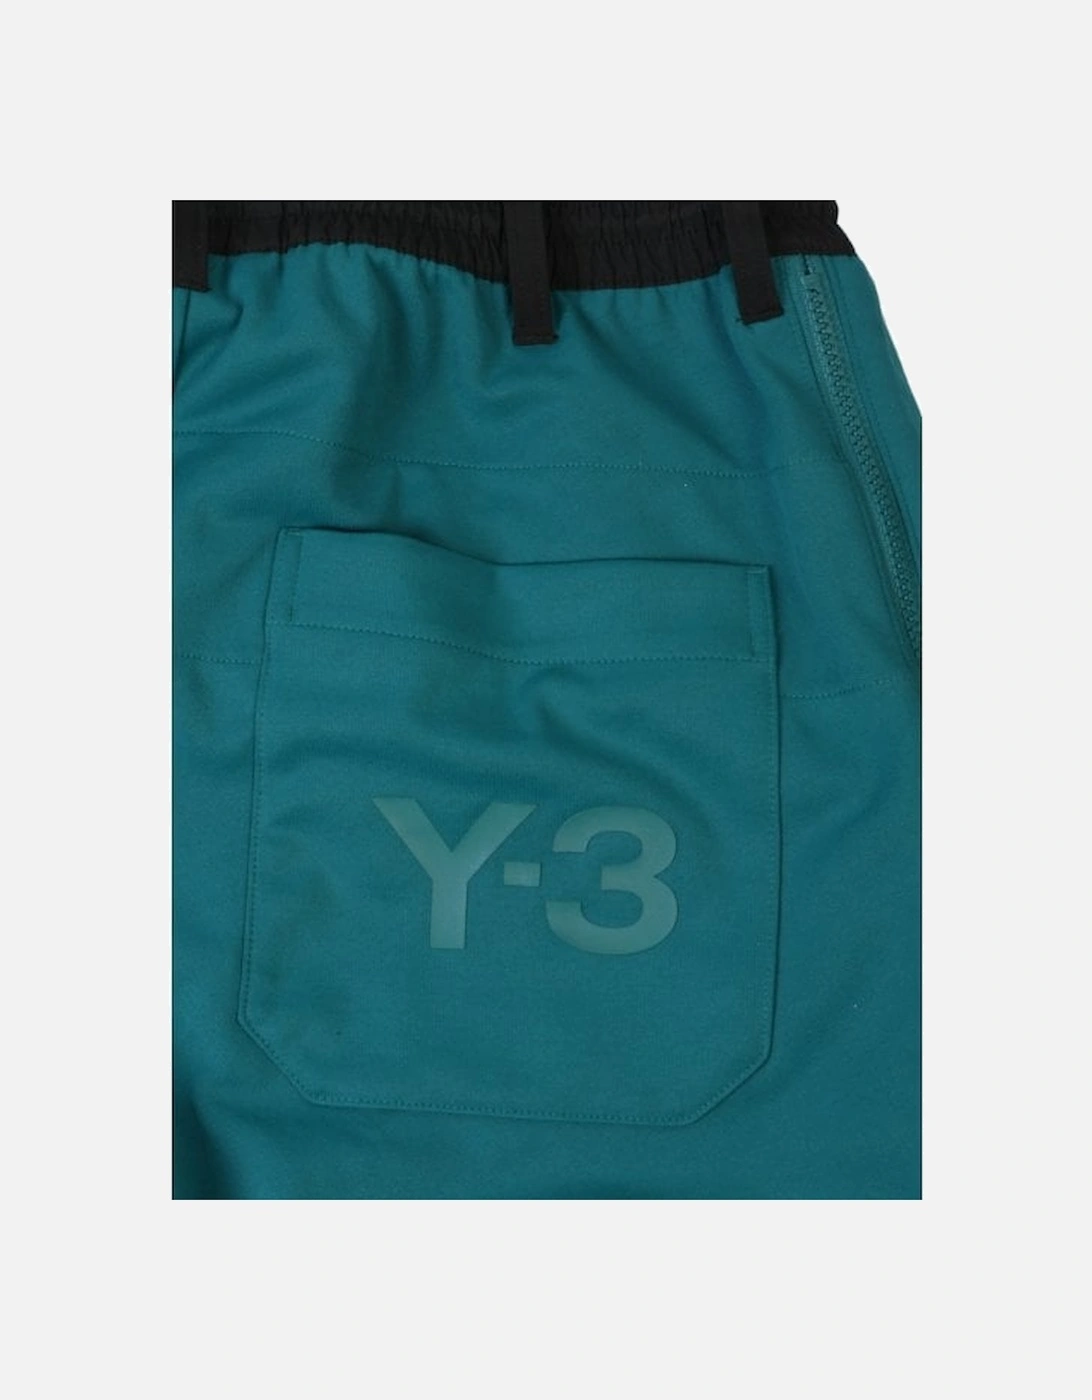 Y-3 Men's Classic Track Pants Green